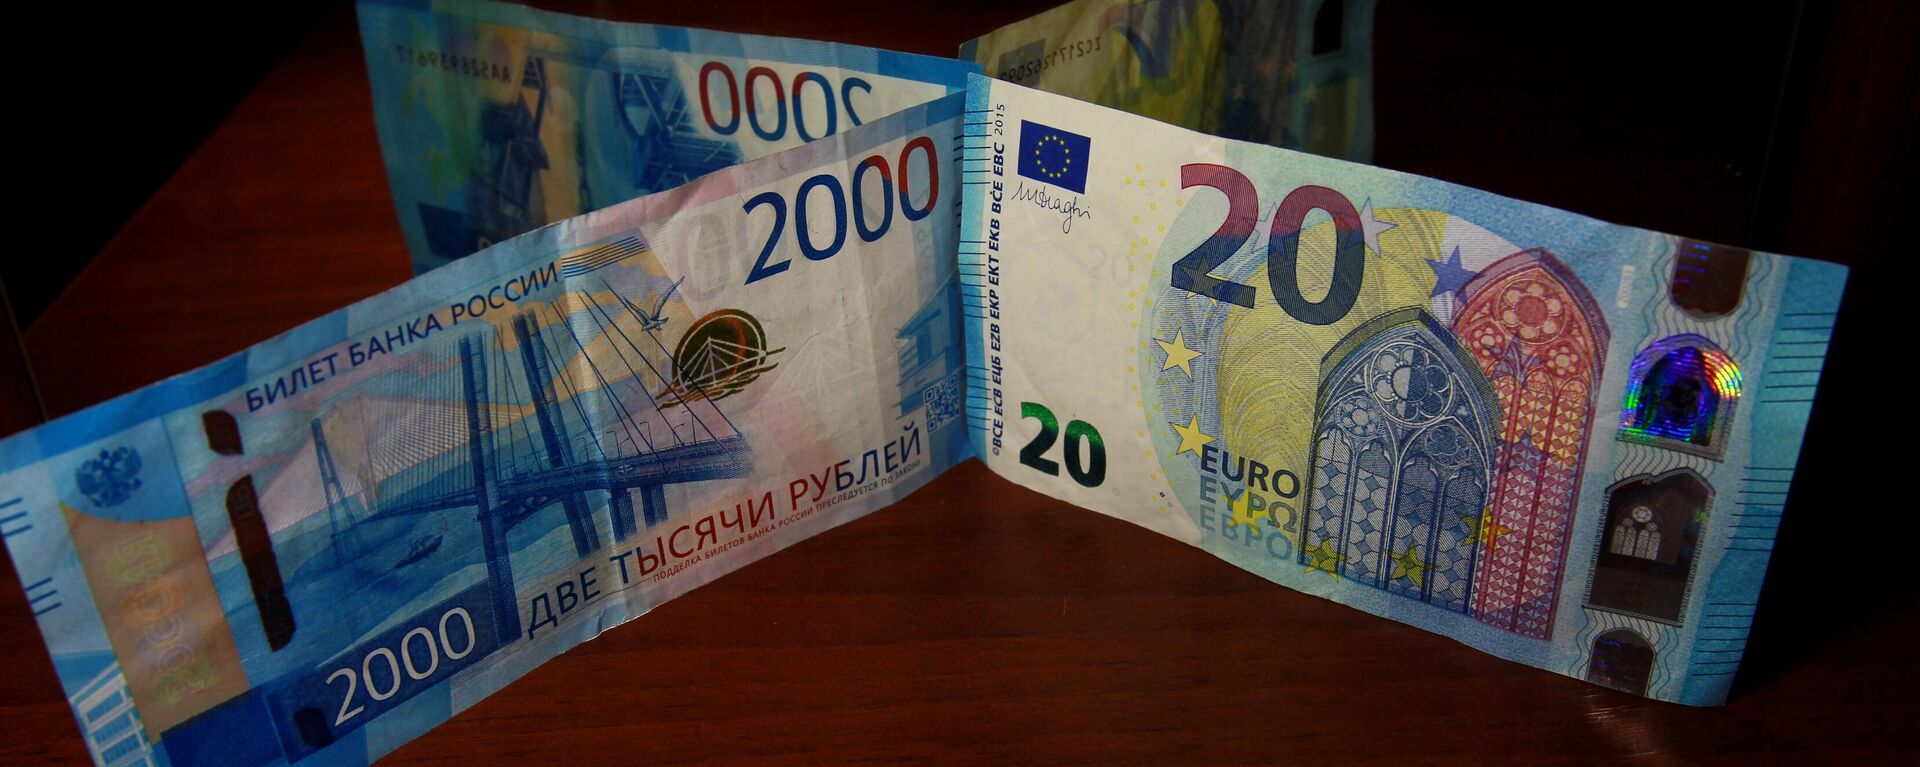 Two thousand rubles banknotes - Sputnik International, 1920, 03.06.2022